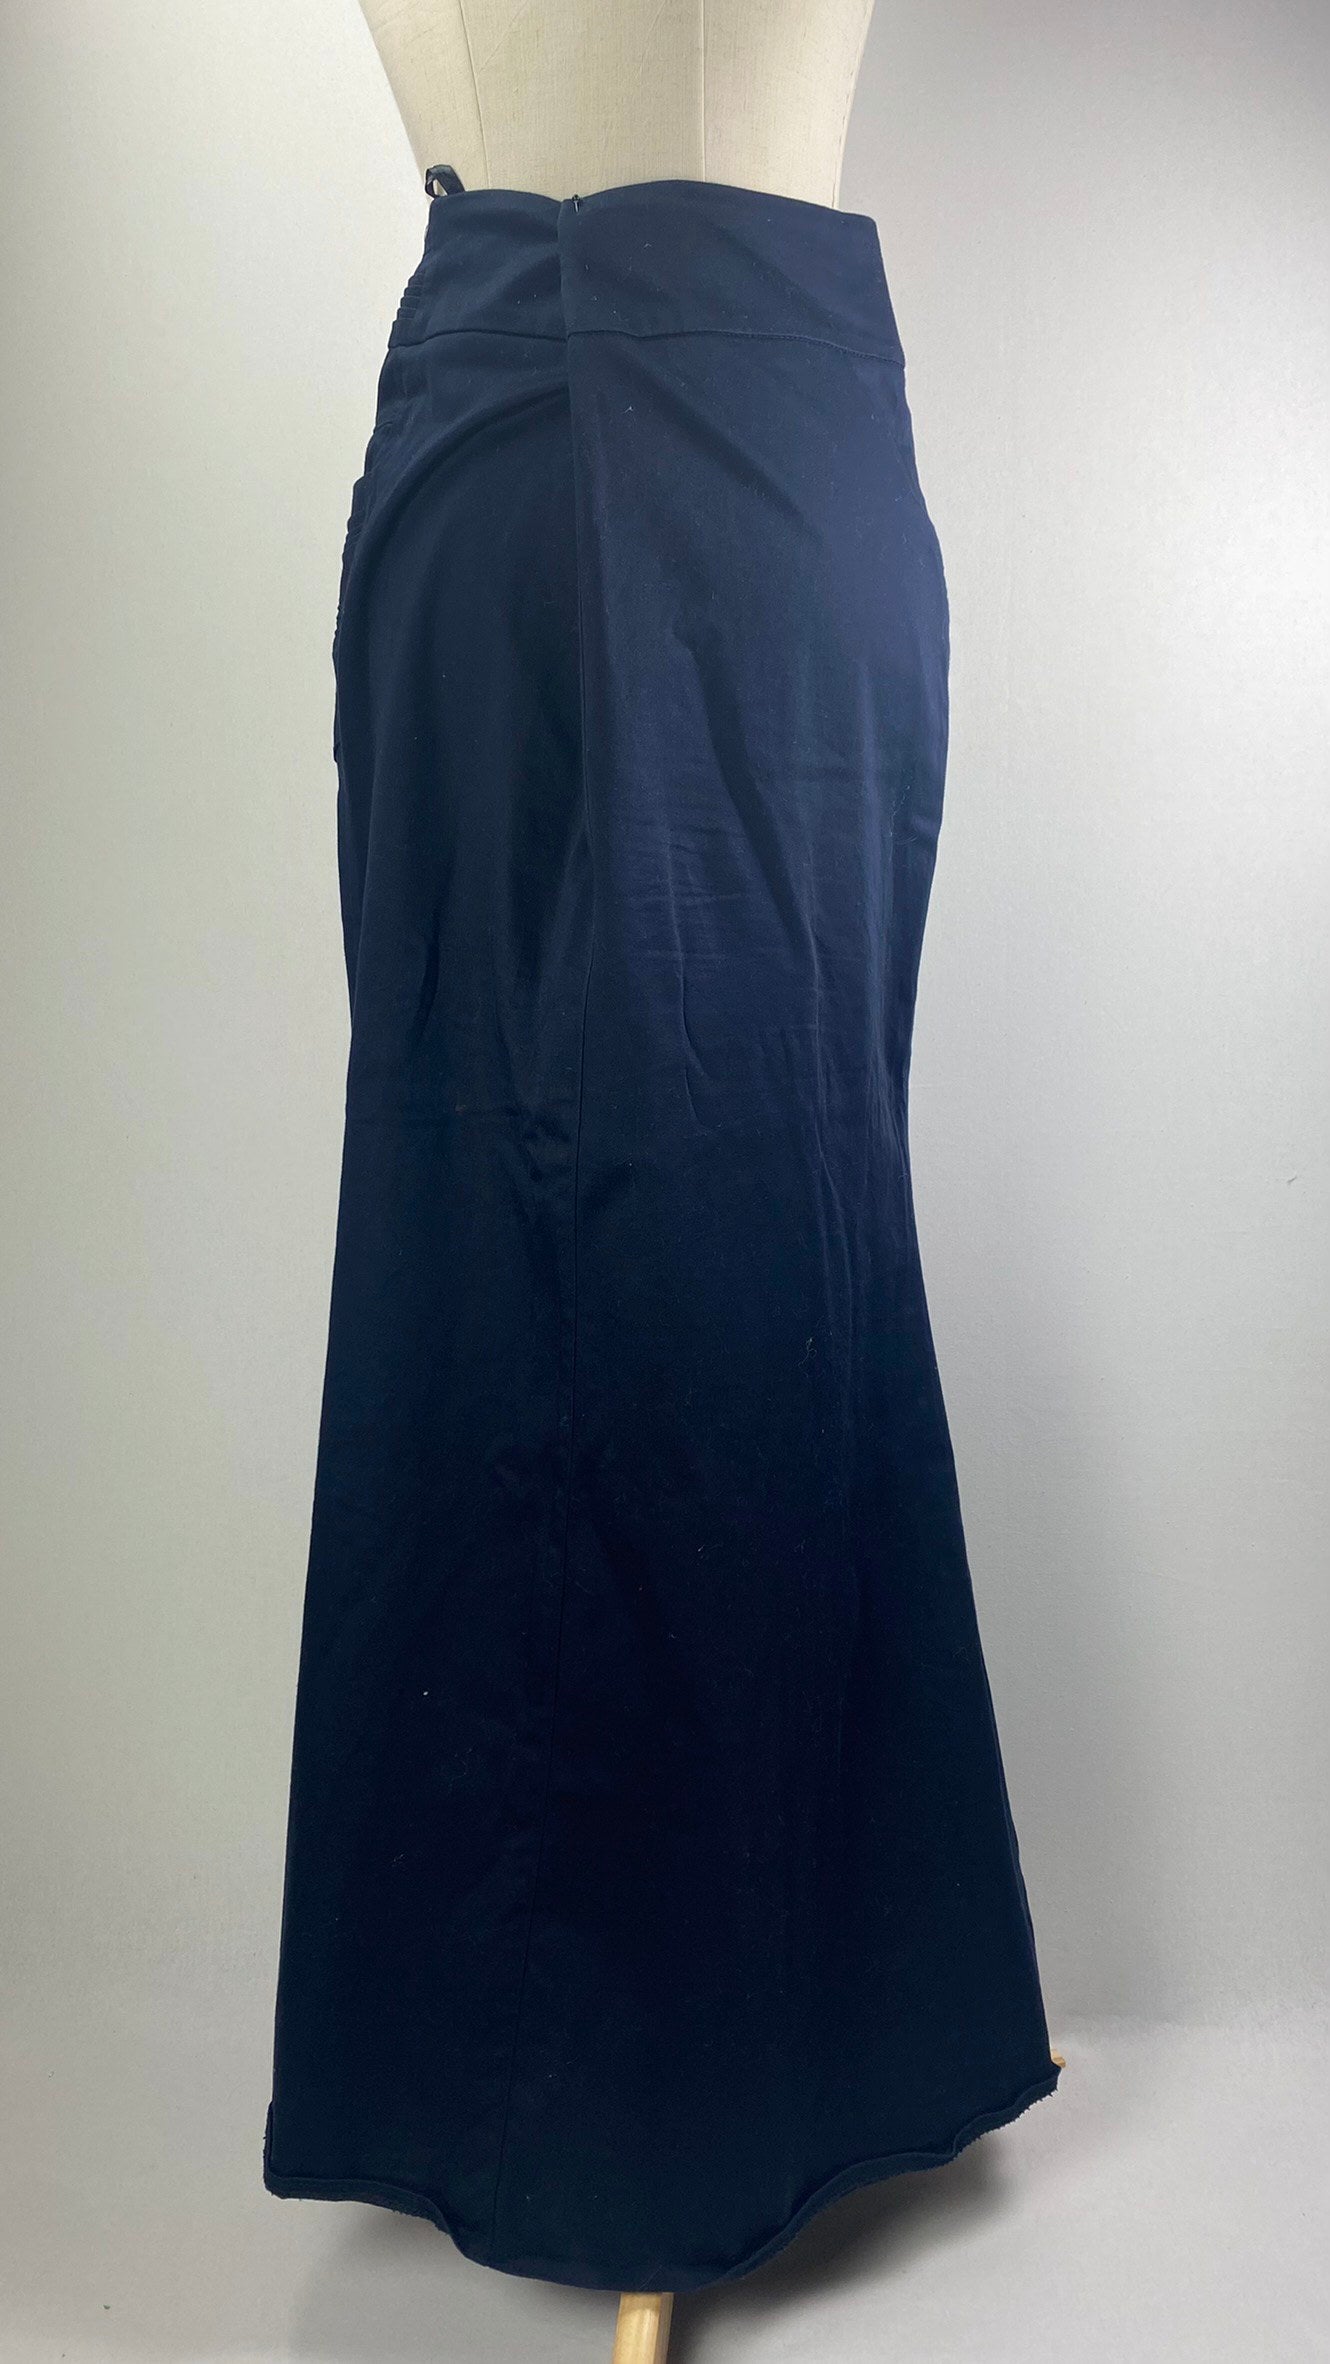 Mermaid Maxi Skirt with Pocket, Black